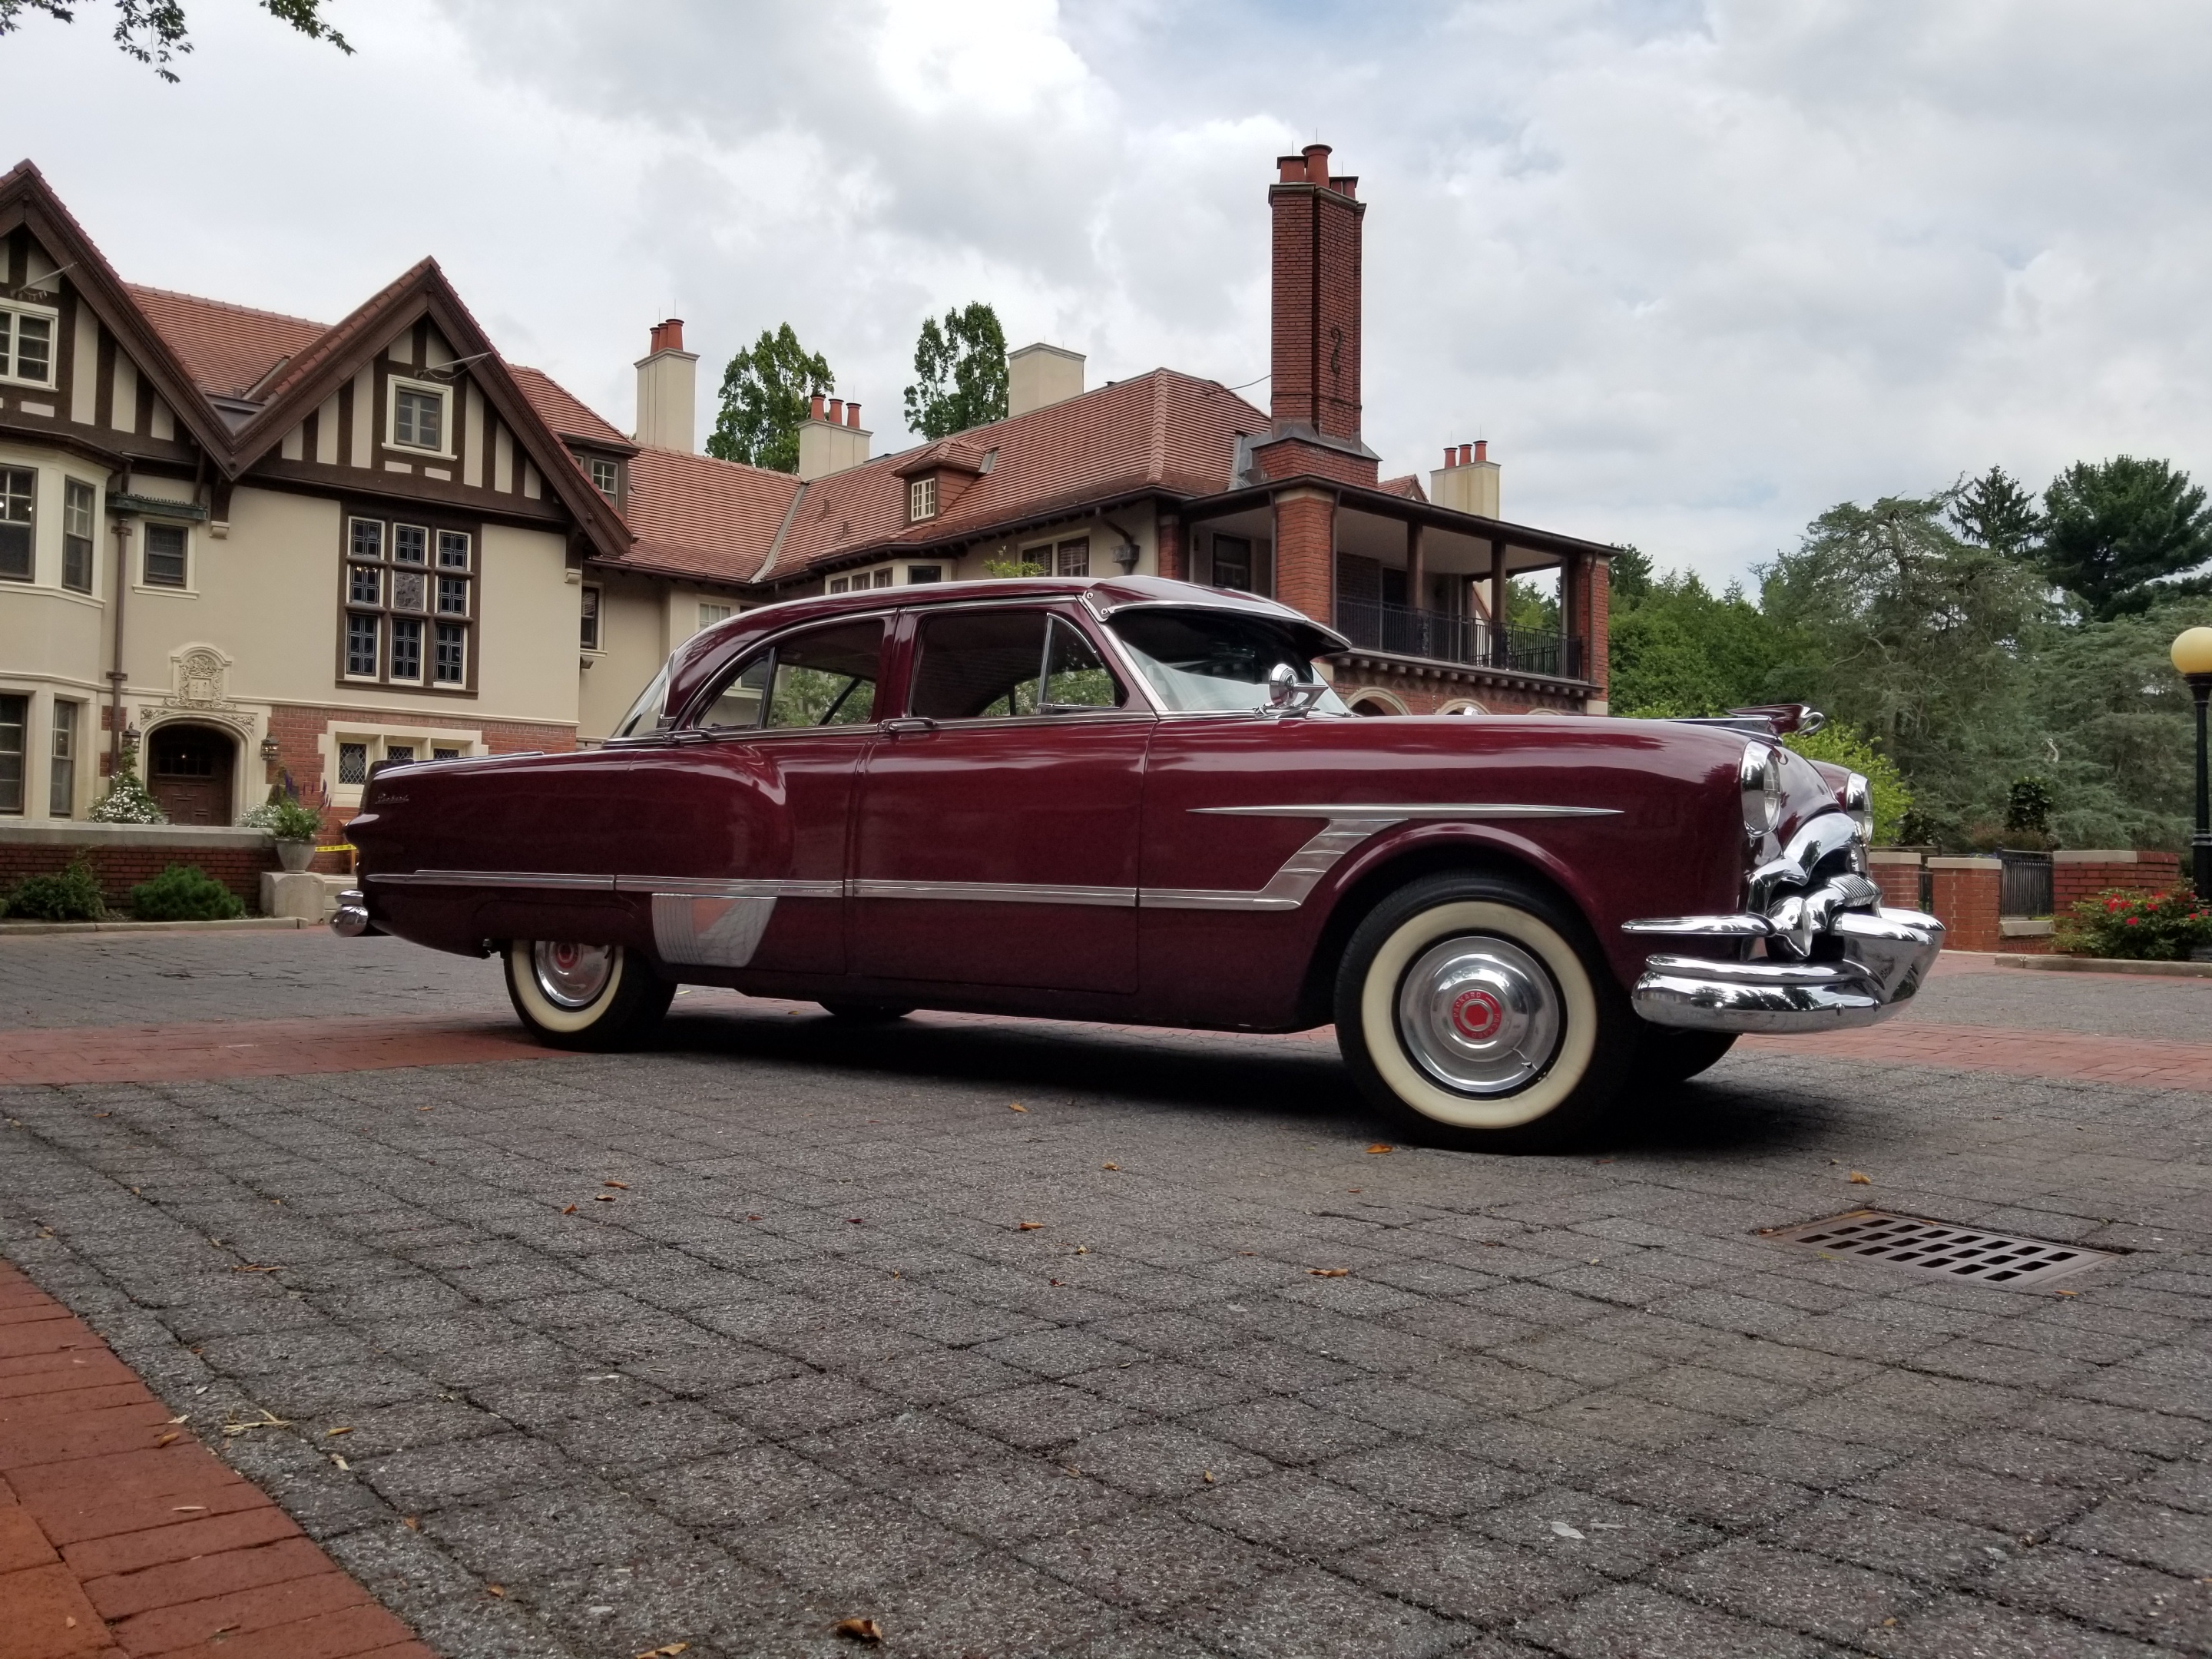 1953 Packard Patrician at Cranbrook in Bloomfield Hills, MI